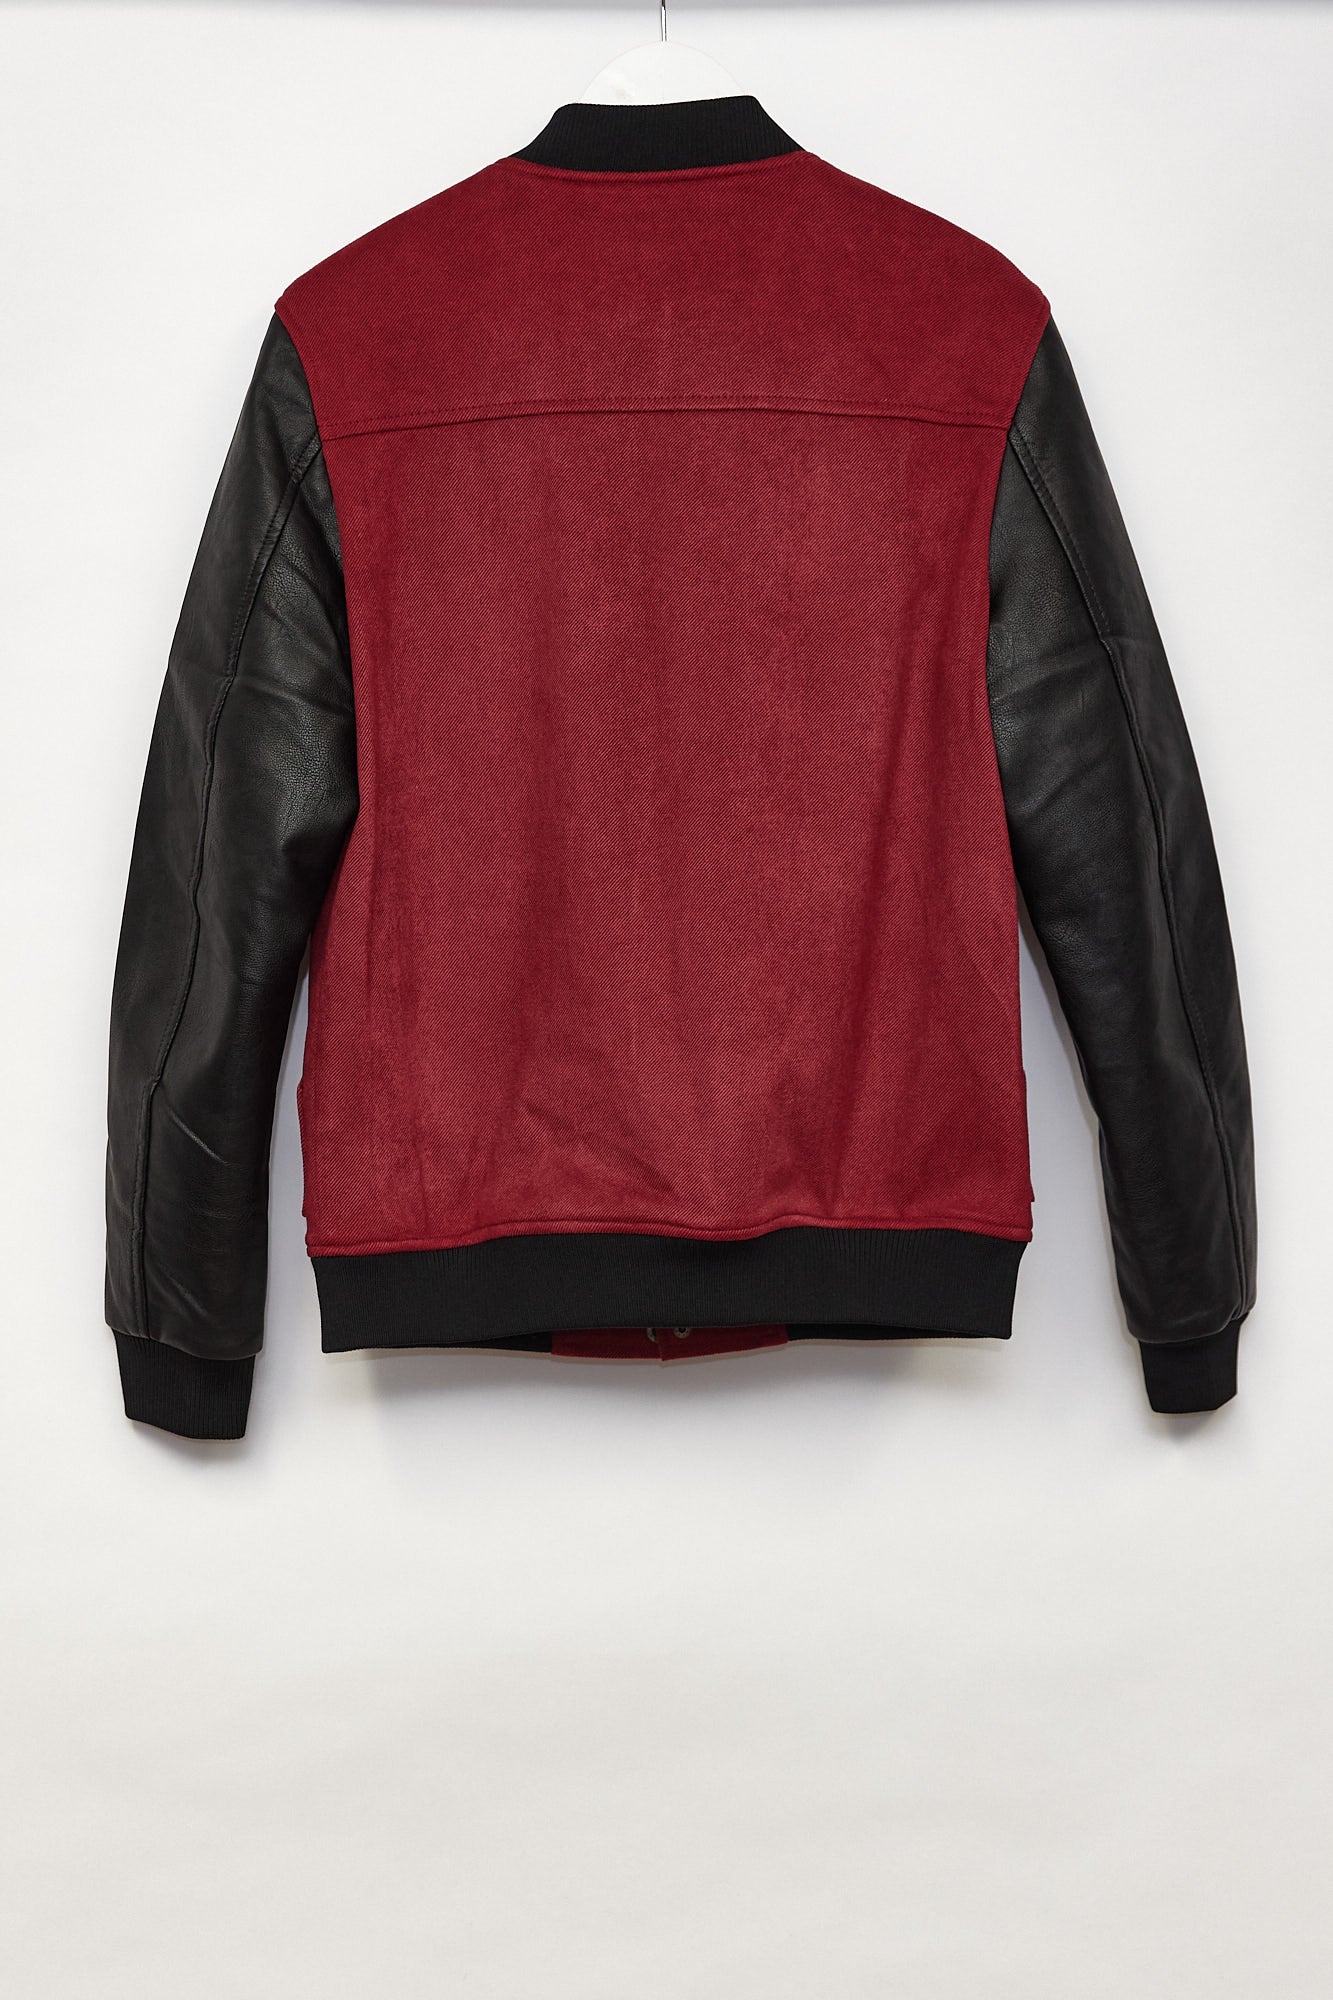 Mens Frilivin red varsity style jacket size medium